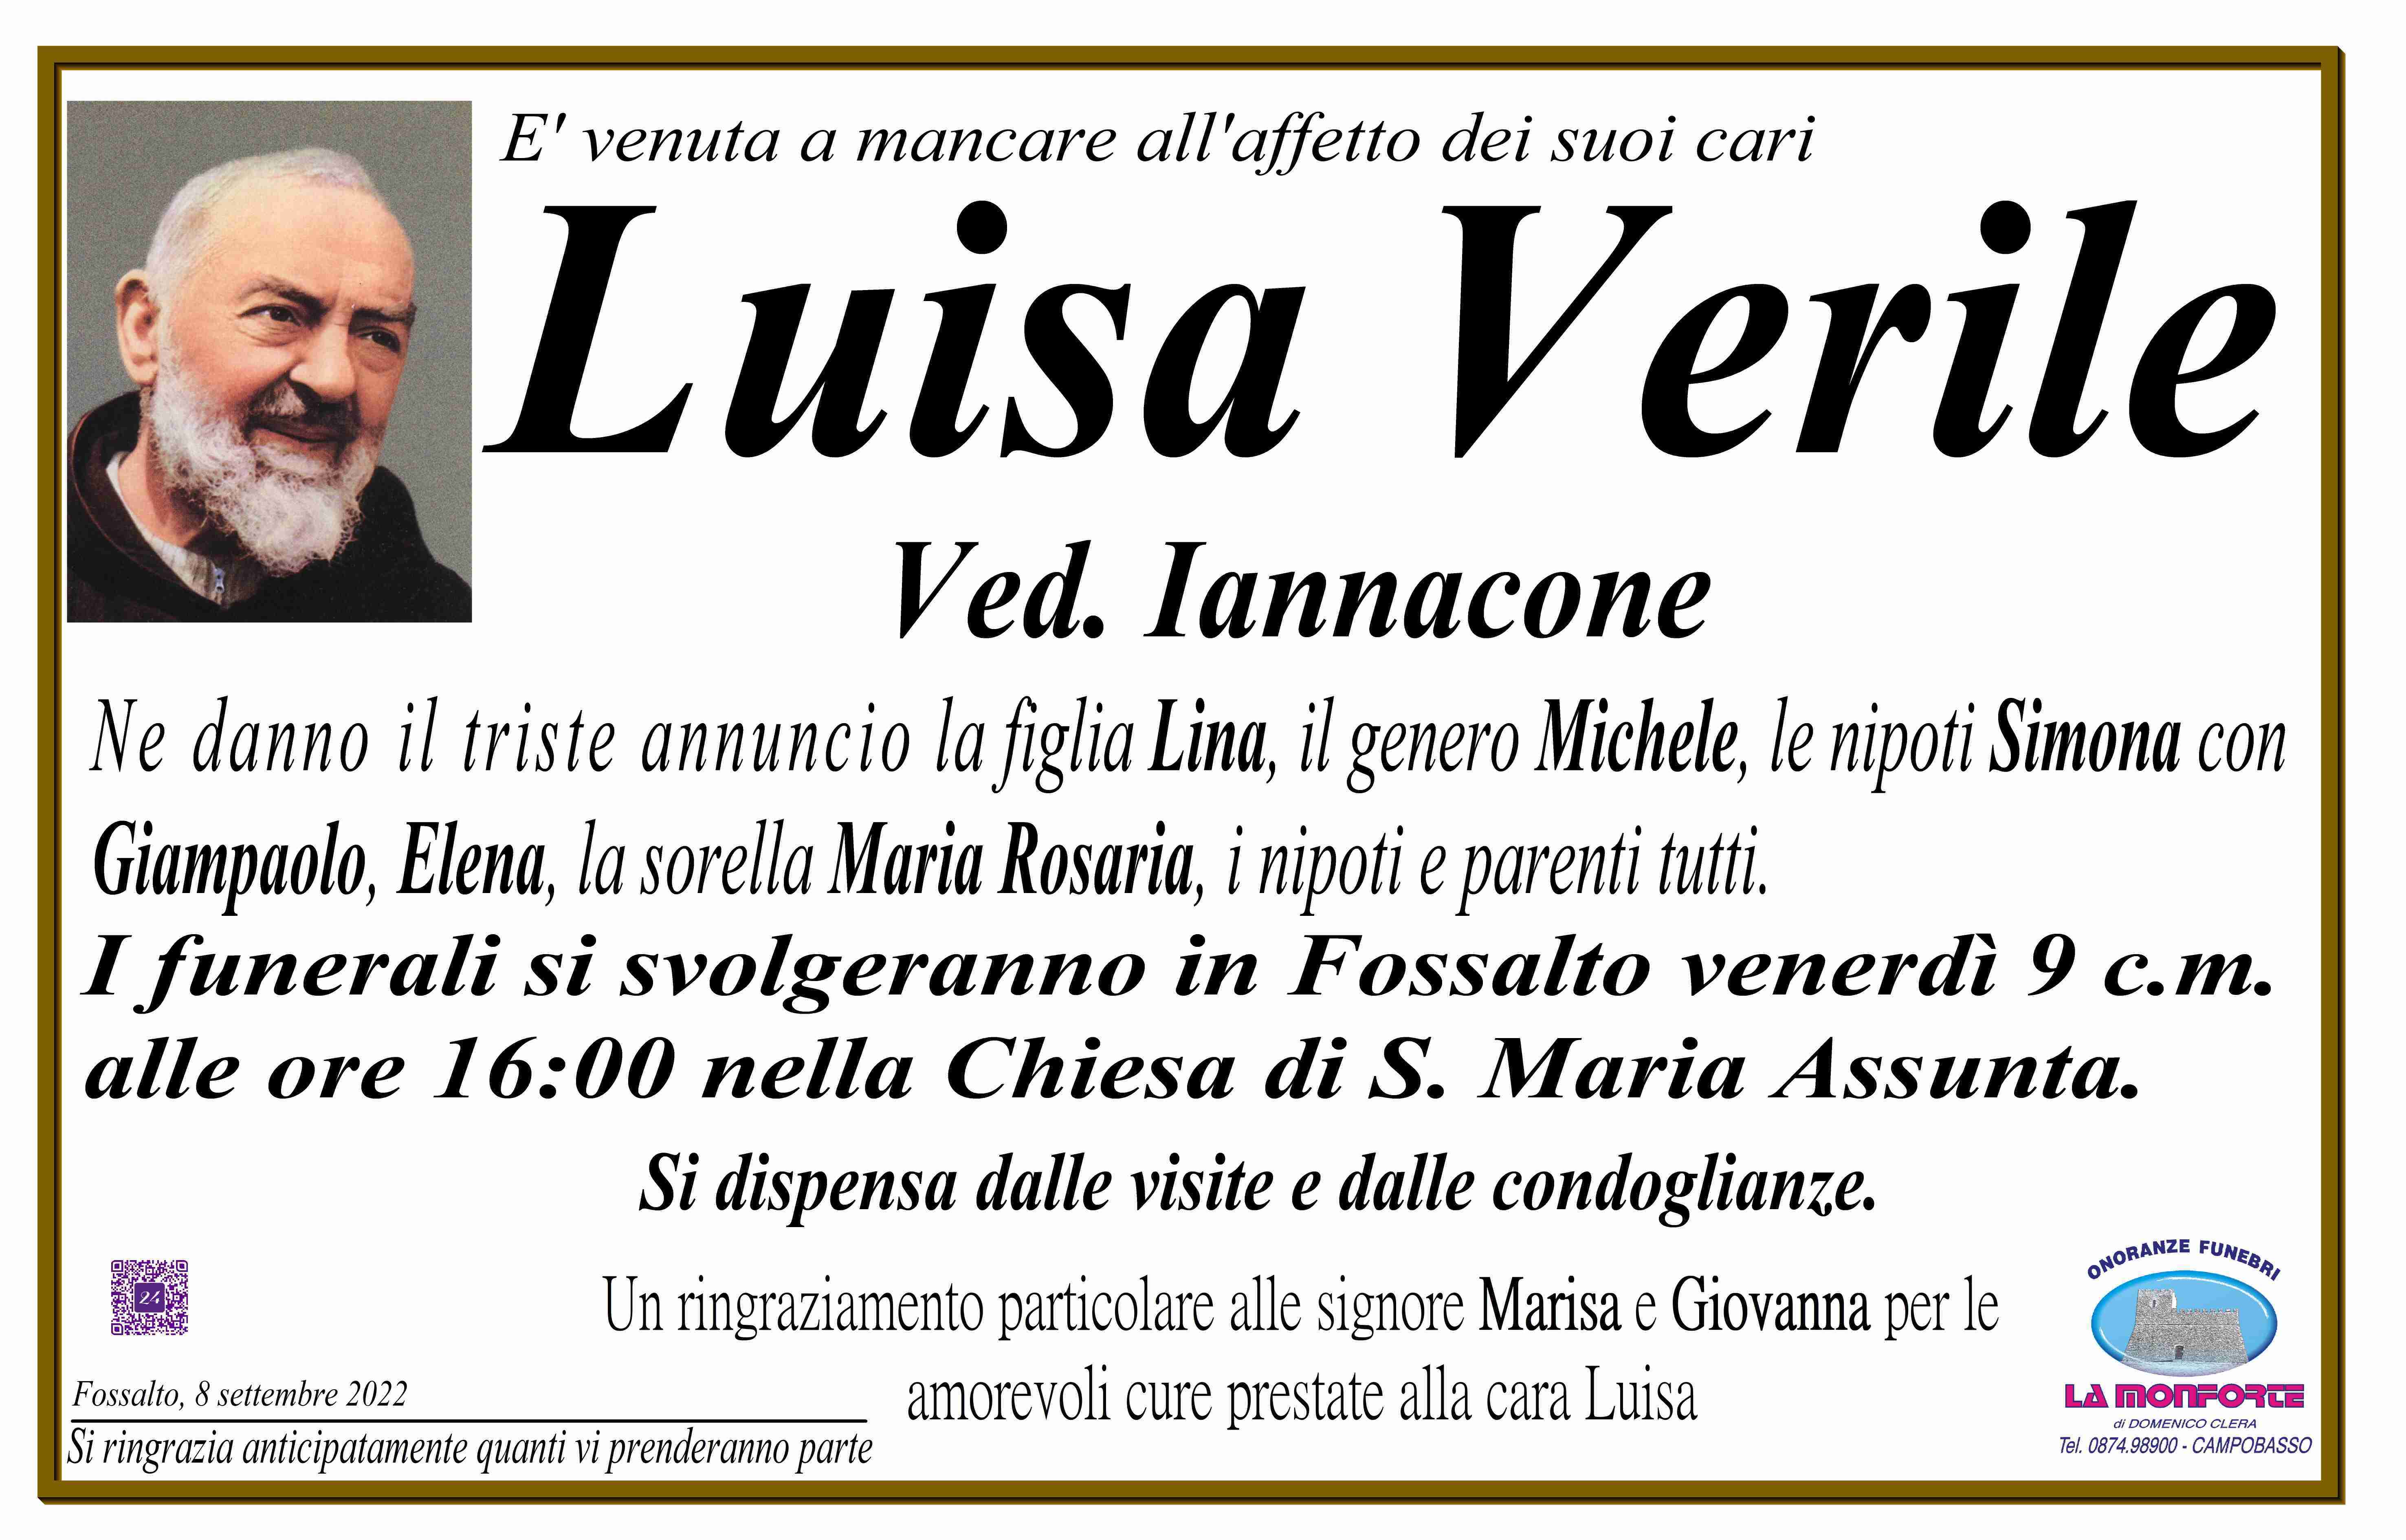 Luisa Verile